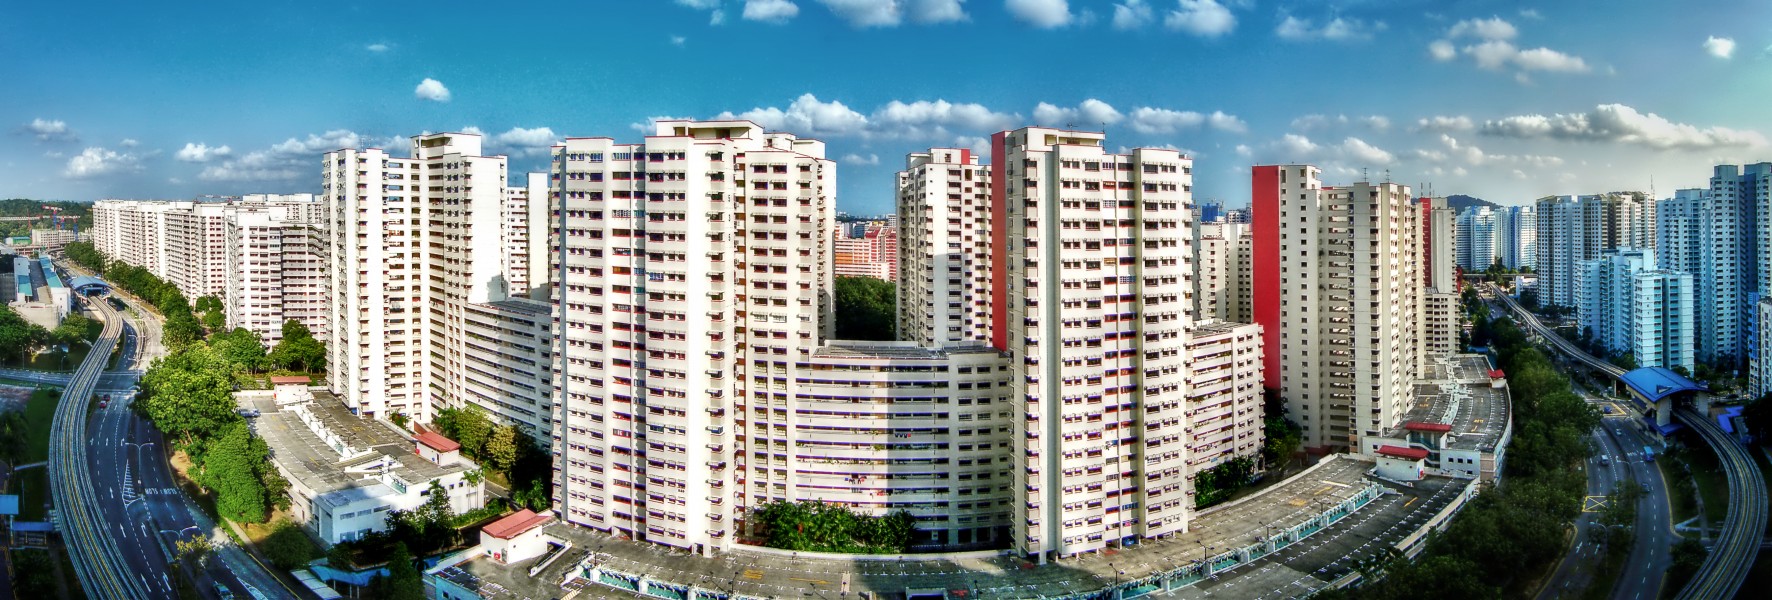 Housing and Development Board flats in Bukit Panjang, Singapore - 20130131 (single-row panorama)